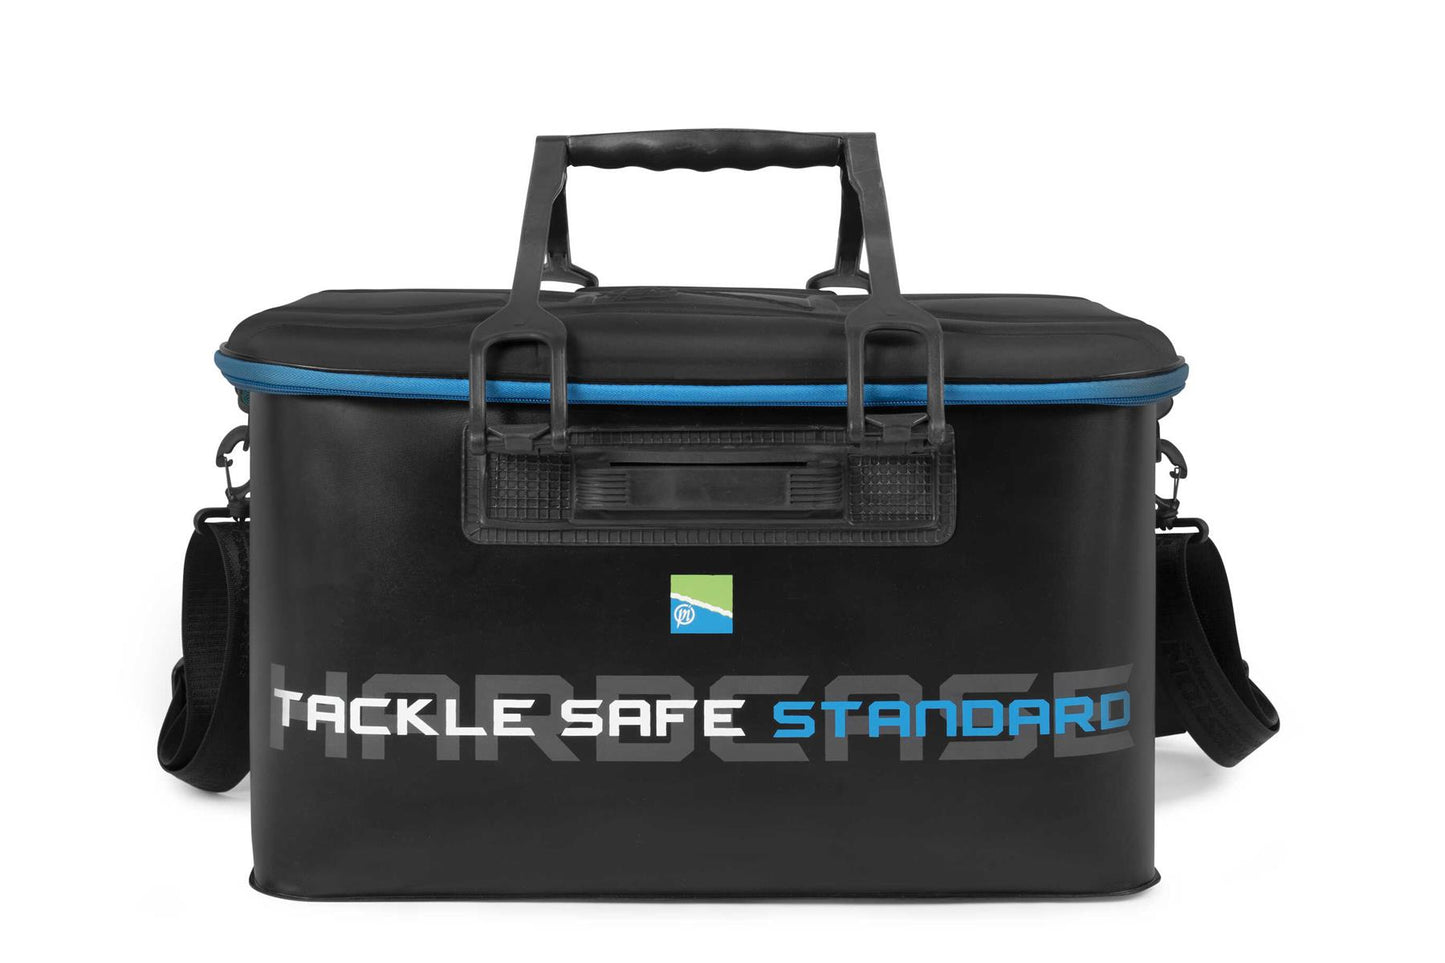 Preston Innovations Hardcase Tackle Safe